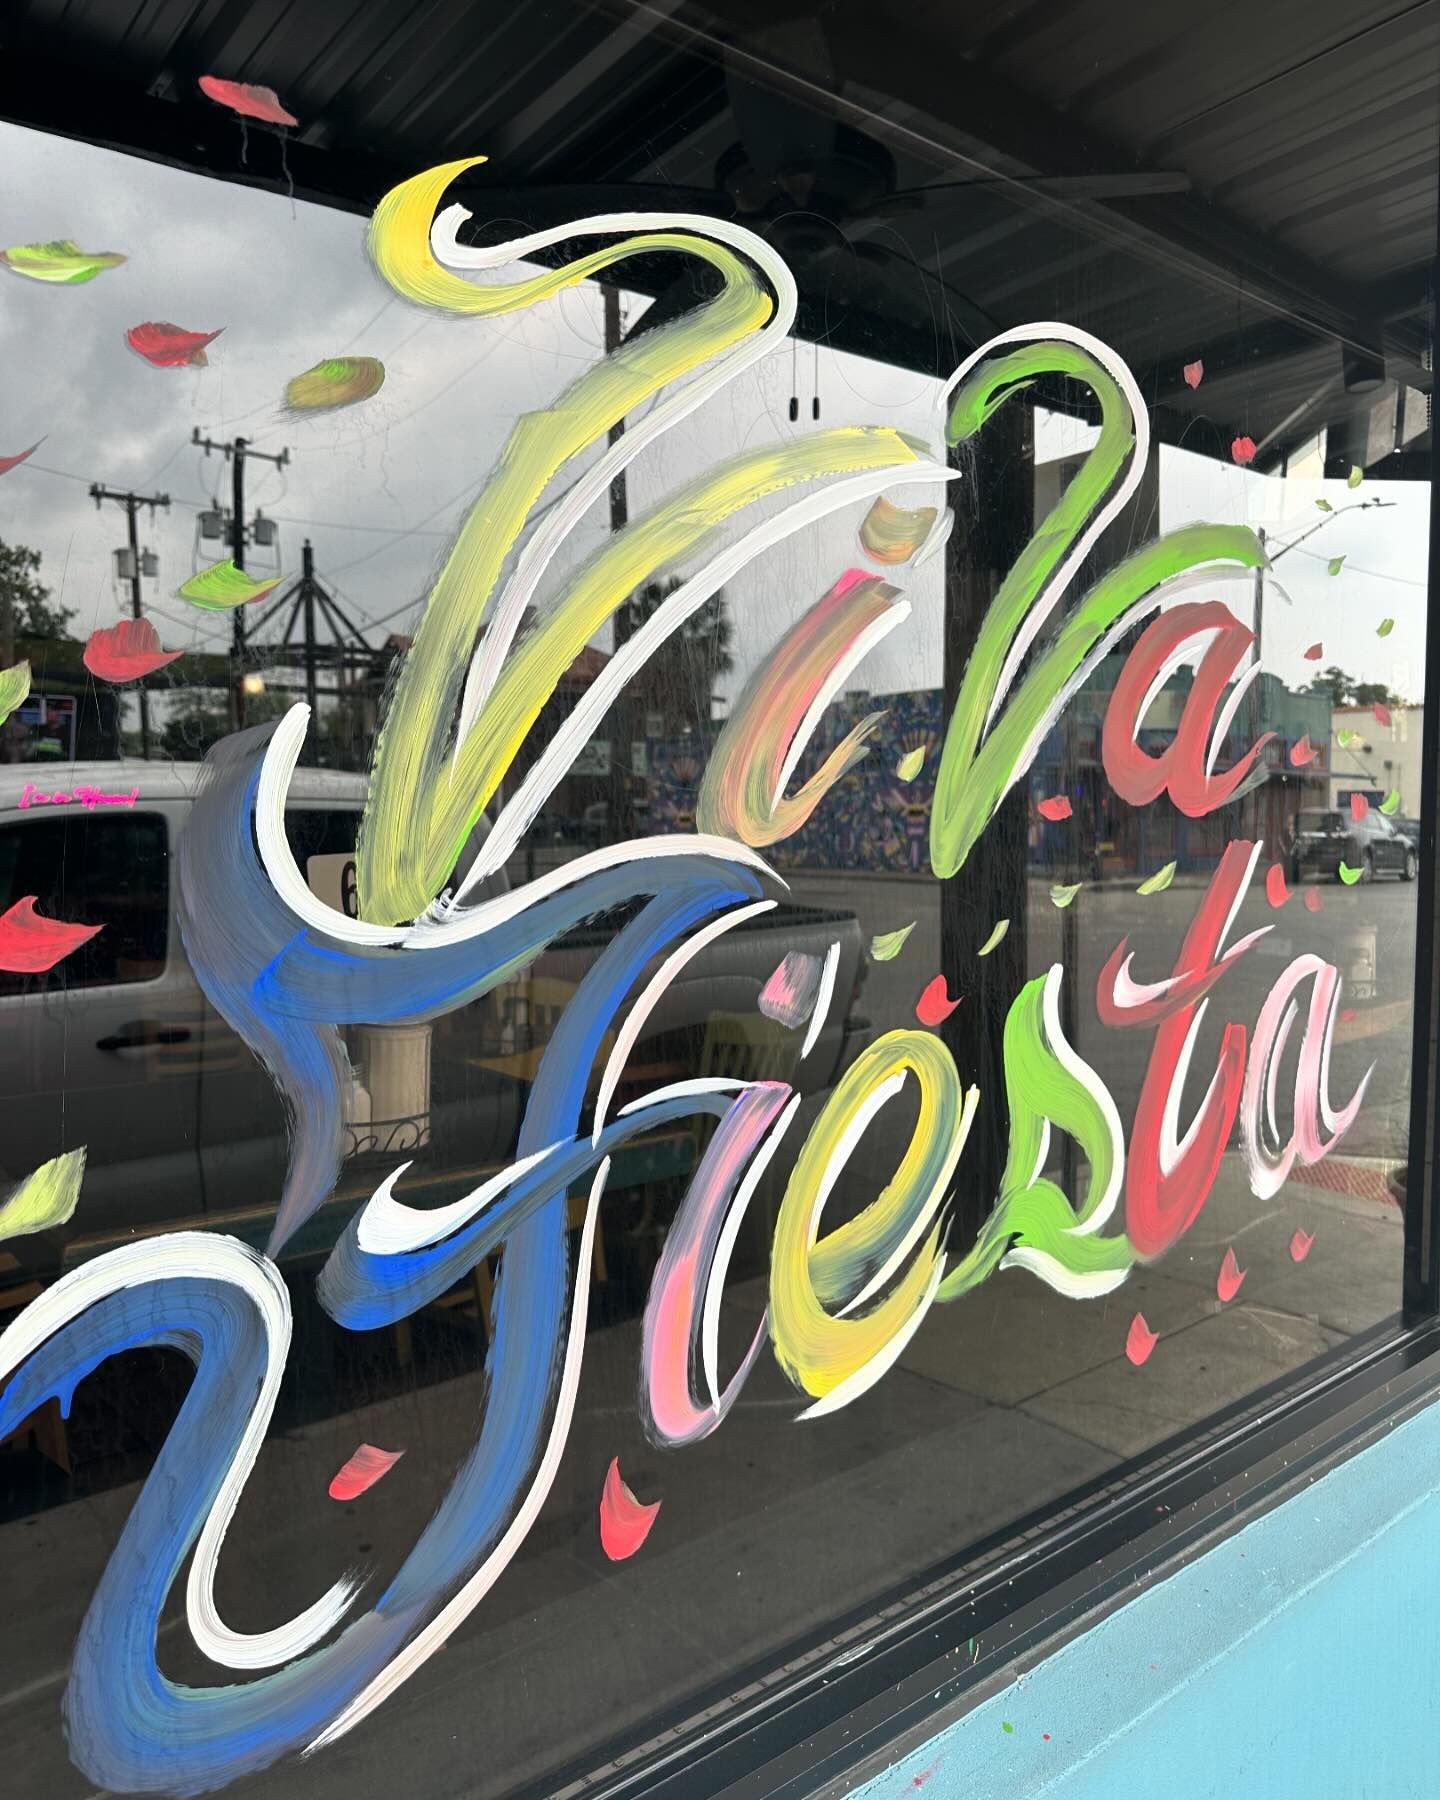 Viva Fiesta ! 🪅 
Who’s ready for tacos 🌮, tequila & Tatas!! ?? 
.
.
.
Follow @msdezfraser for tata Tuesdays 🤣
.
.
. 
#explore #explorepage #tacotuesday #curvy #fiesta #satx